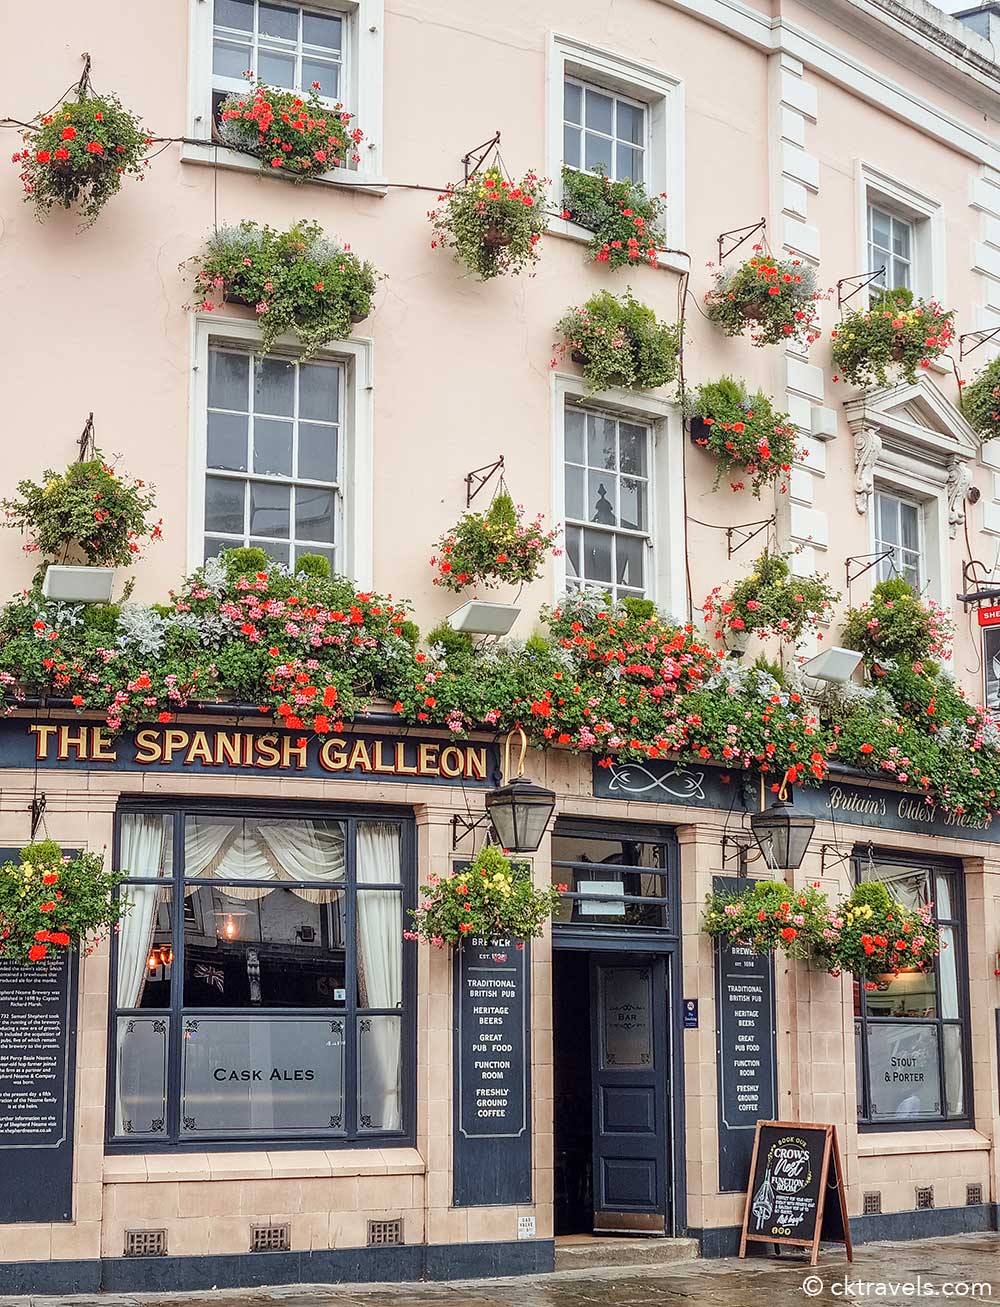 The Spanish Galleon pub in Greenwich London